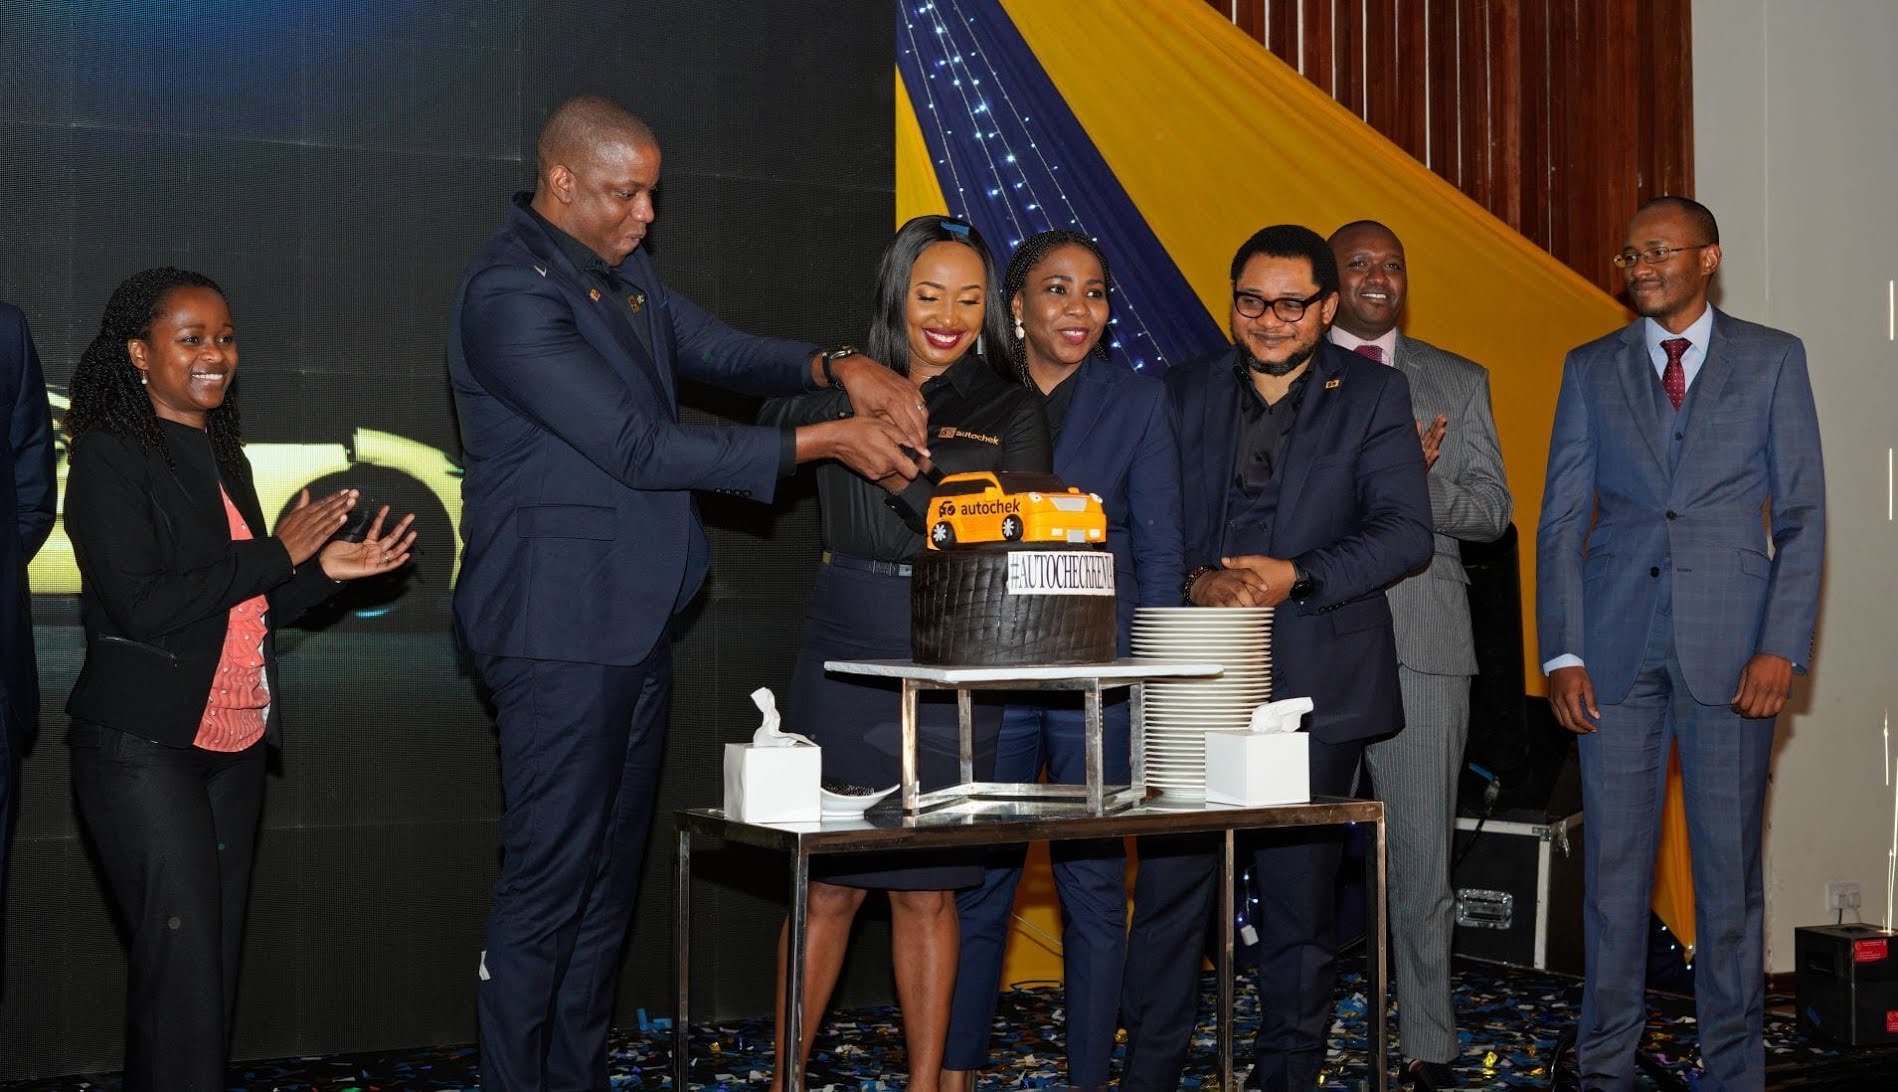 Finally Autochek officially opens in Kenya